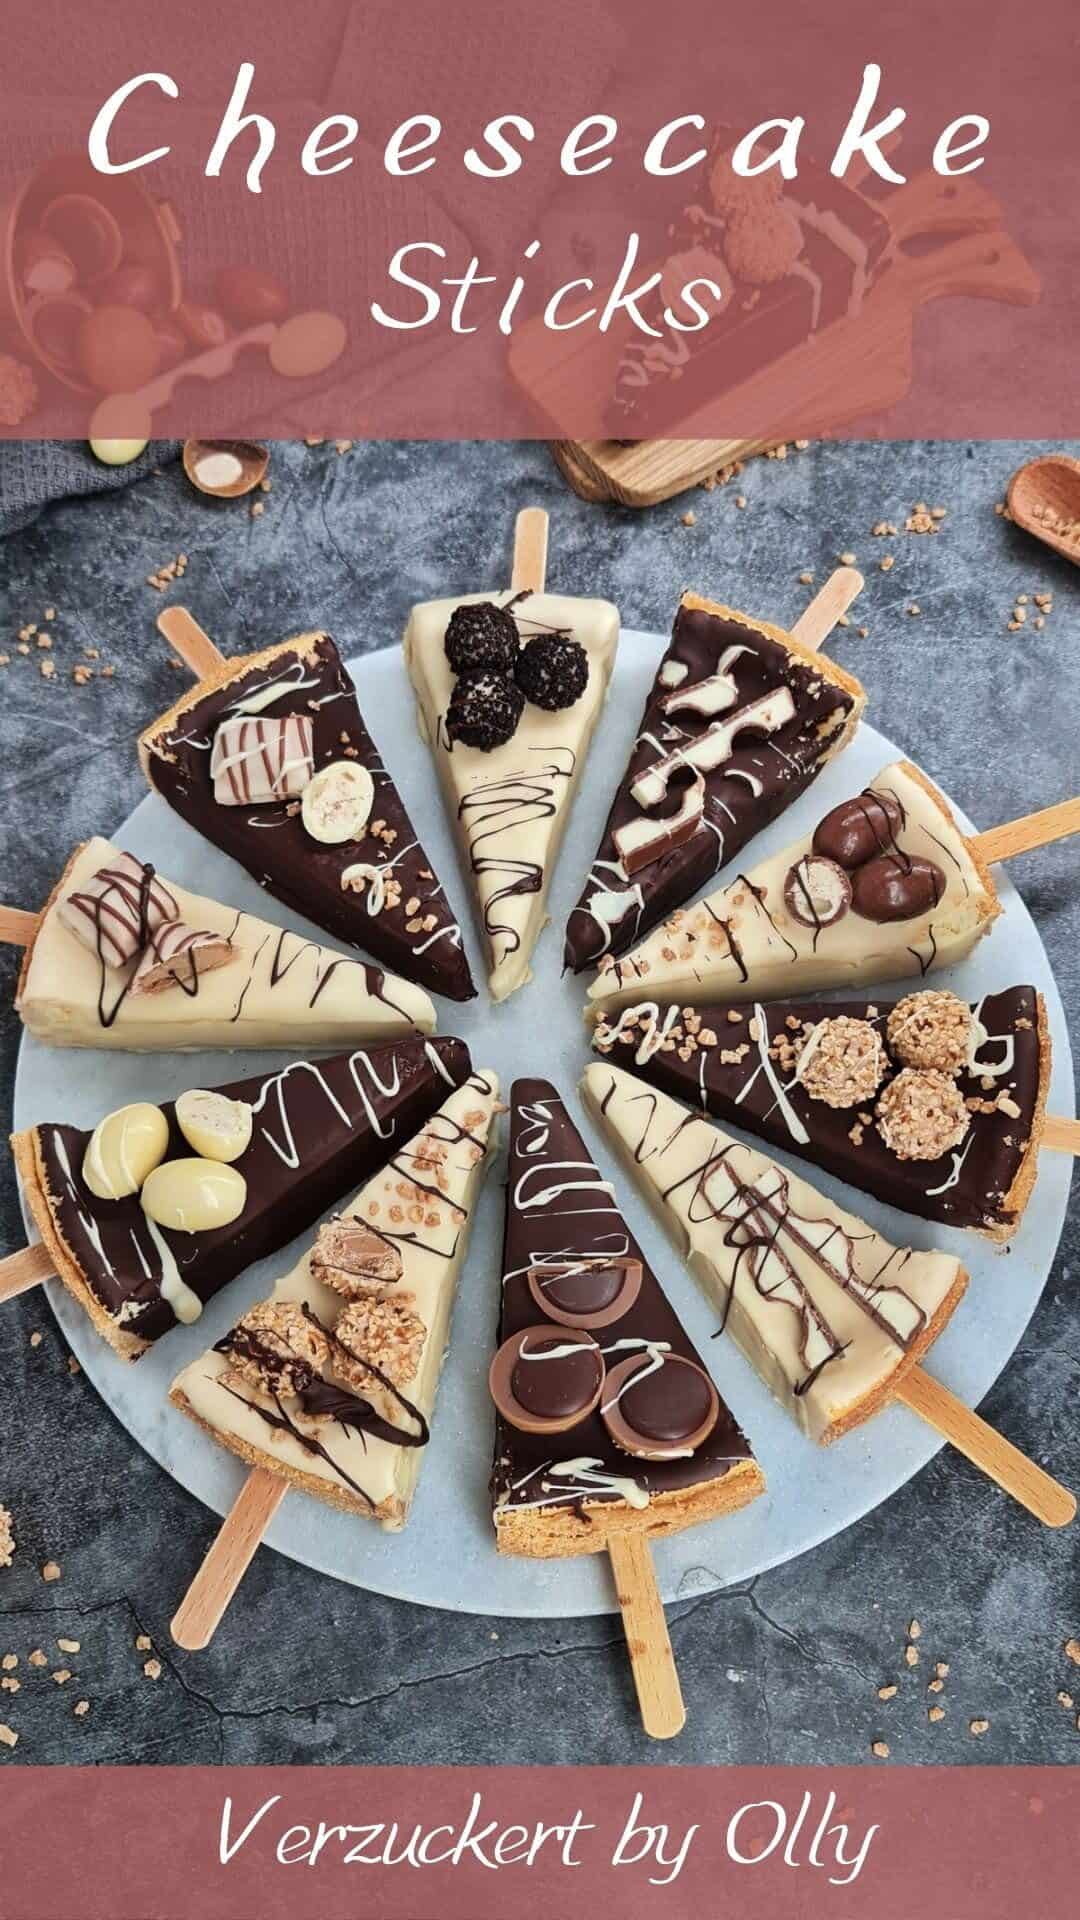 Pin zu Pinterest: Cheesecake Sticks